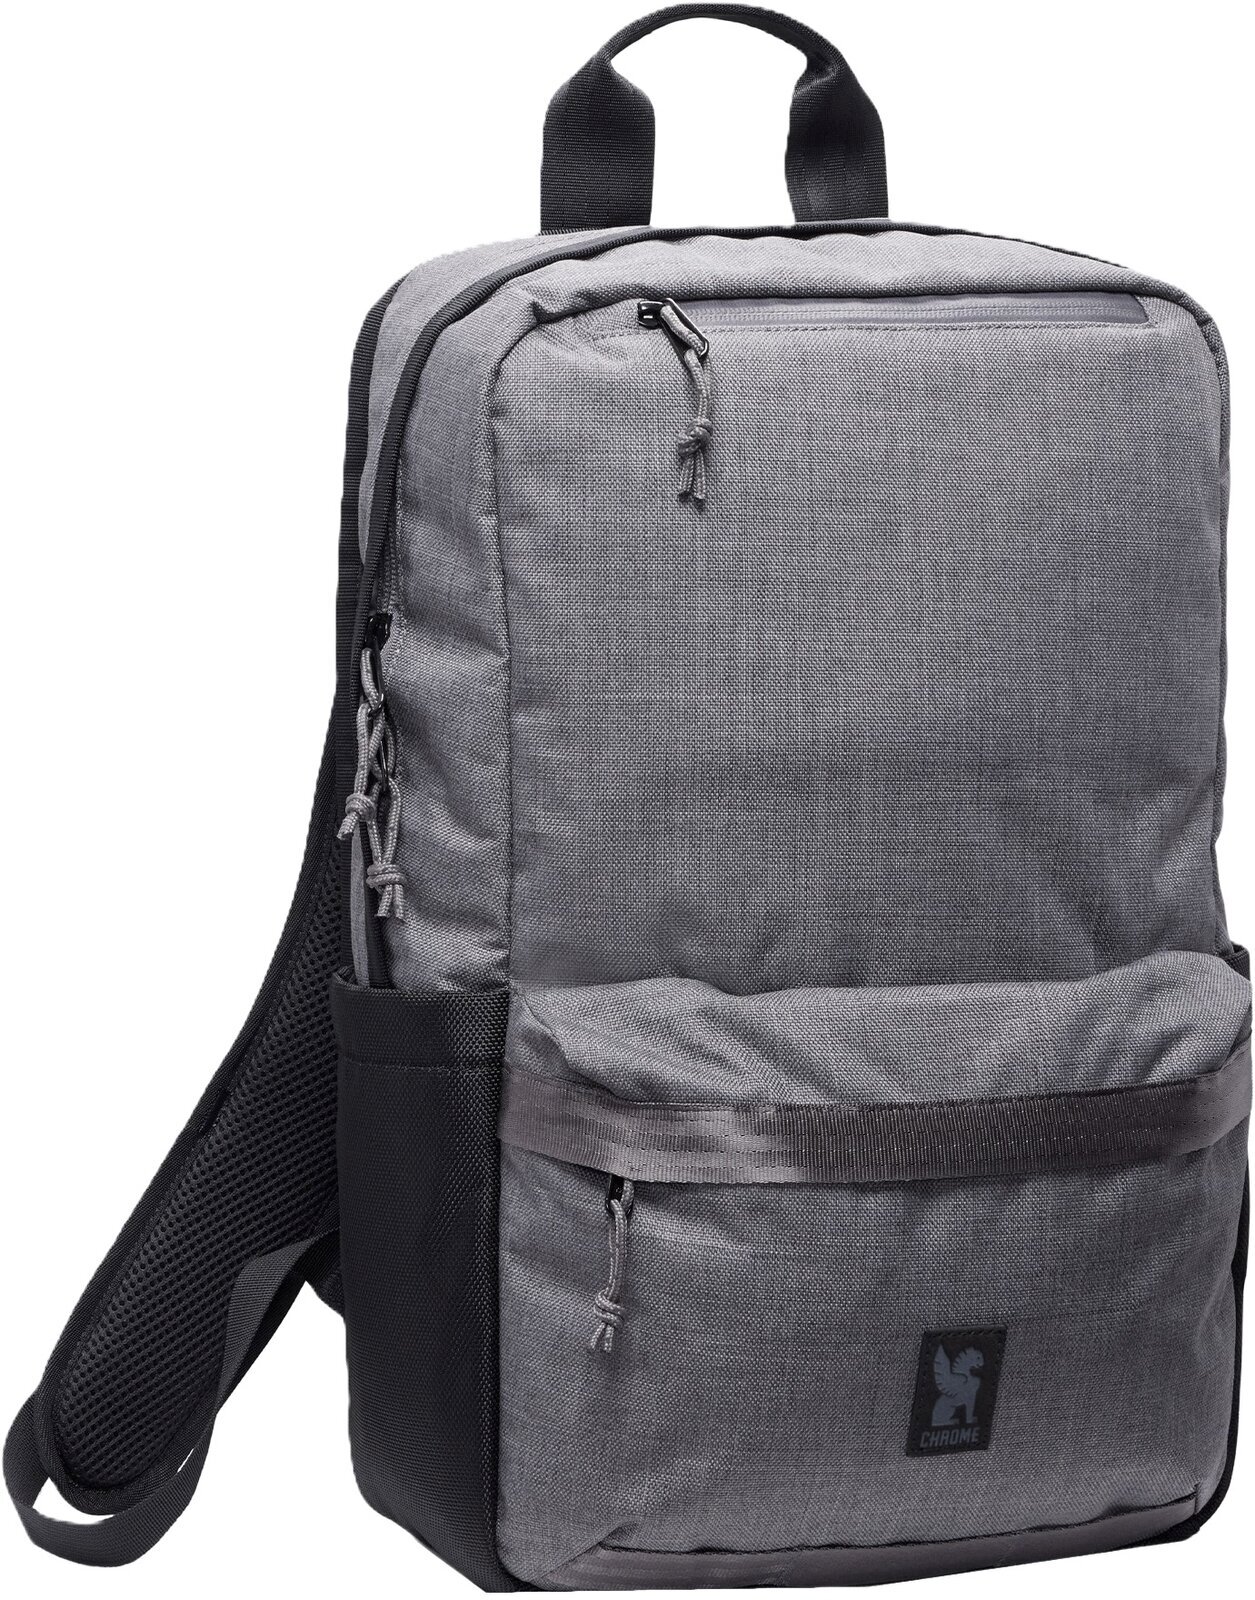 Lifestyle Rucksäck / Tasche Chrome Hondo Backpack Castlerock Twill 18 L Rucksack